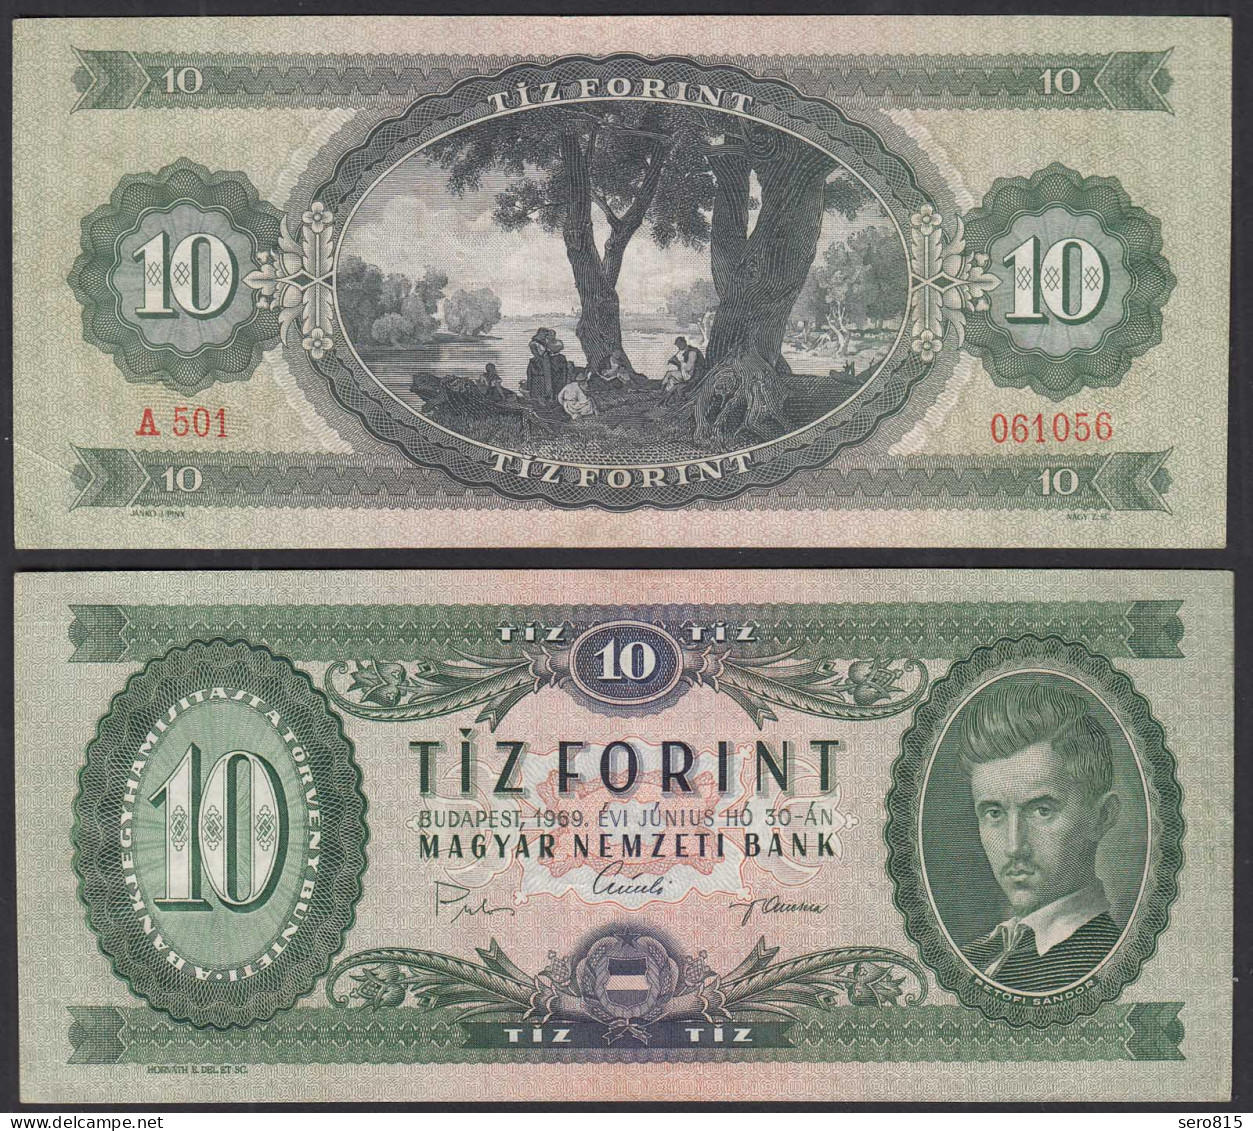 UNGARN - Hungary -  10 Forint 1969 Pick 168d VF+ (3+)    (32436 - Hungary